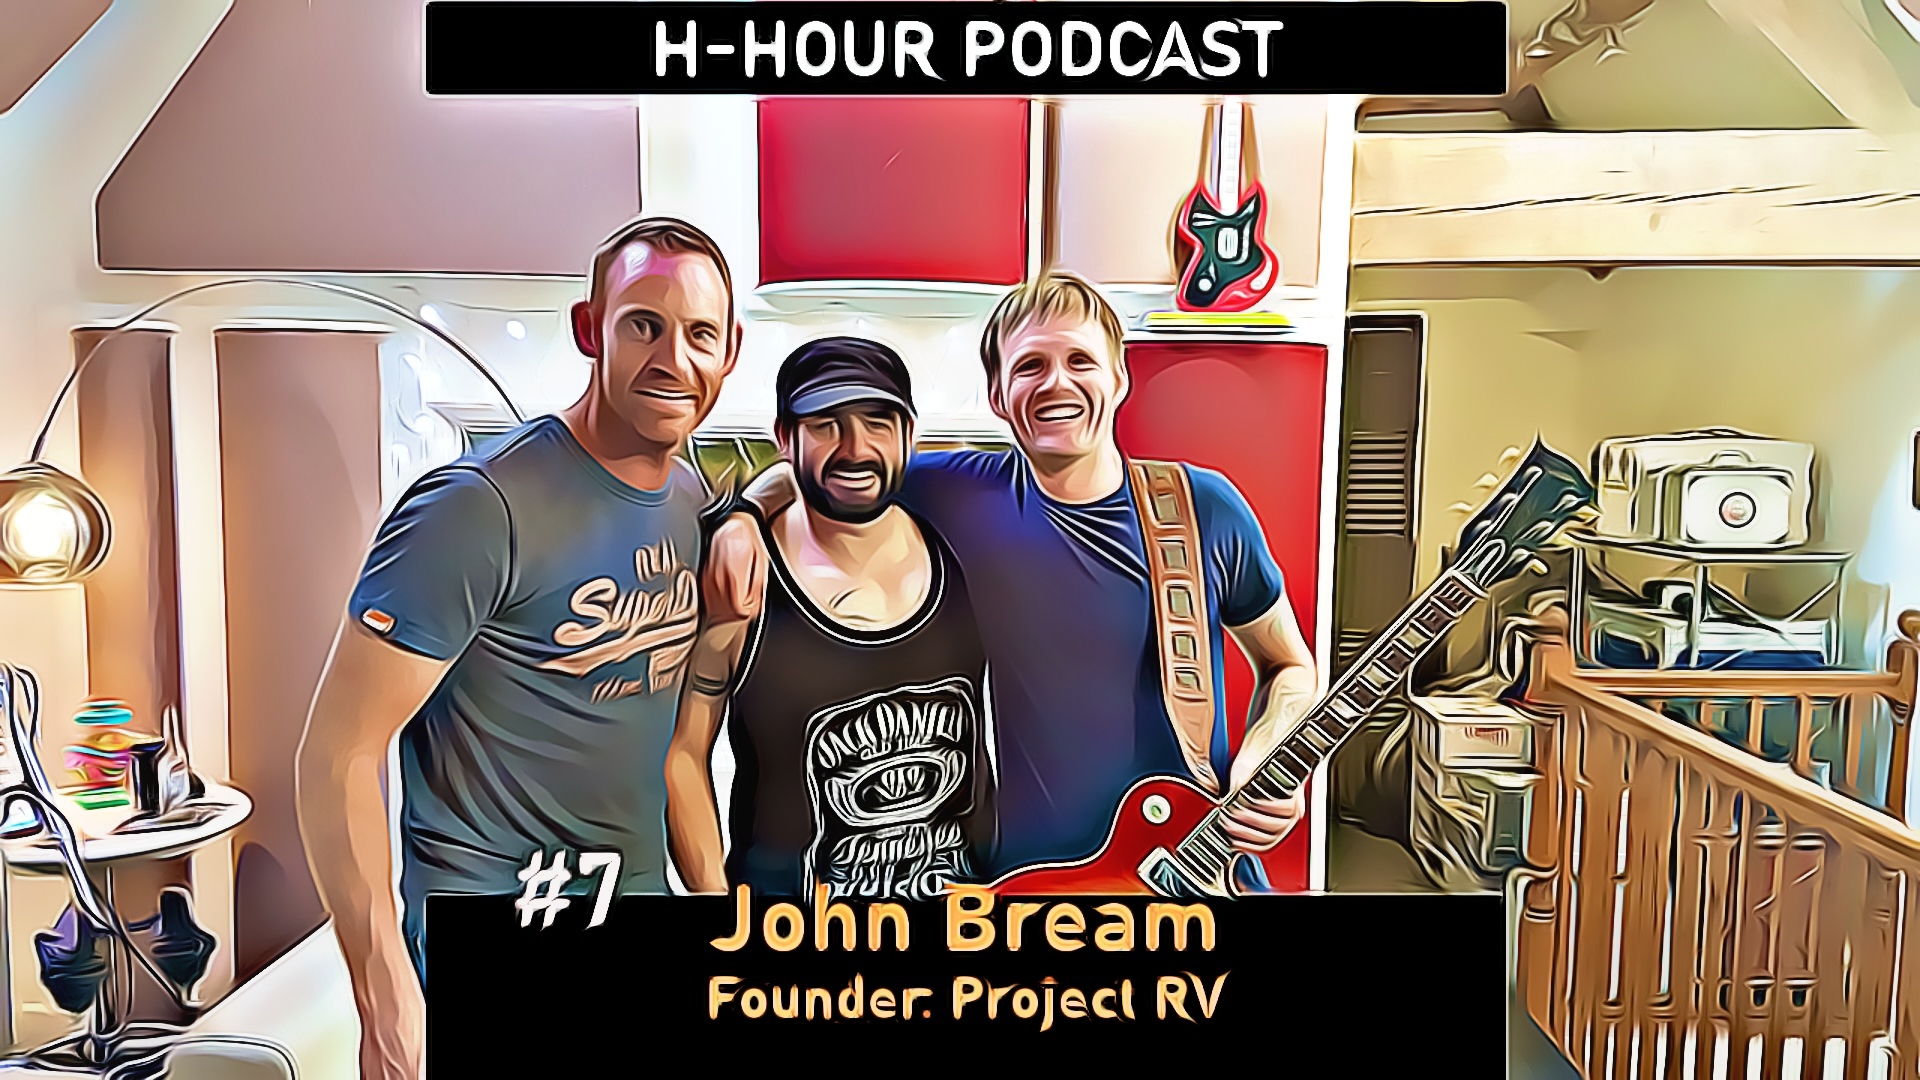 h-hour Podcast nft #7 John Bream cover image (1)